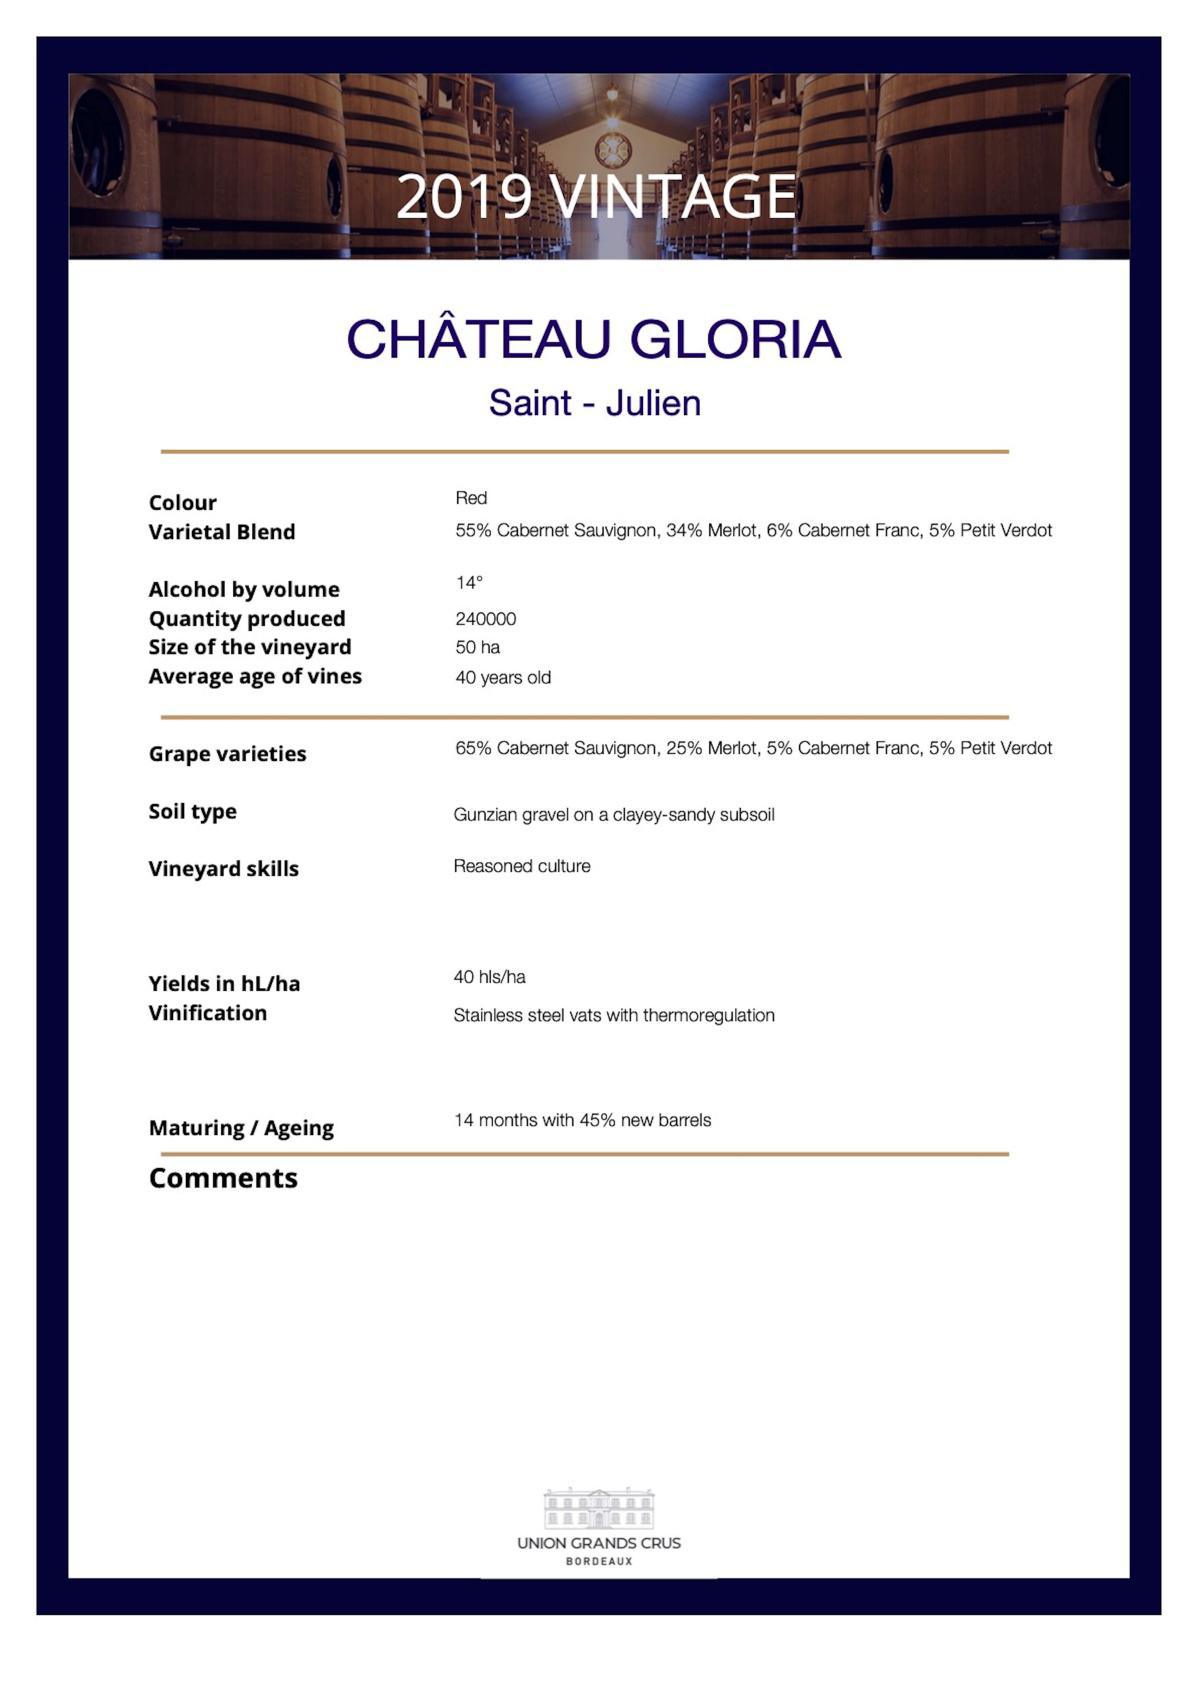 Château Gloria